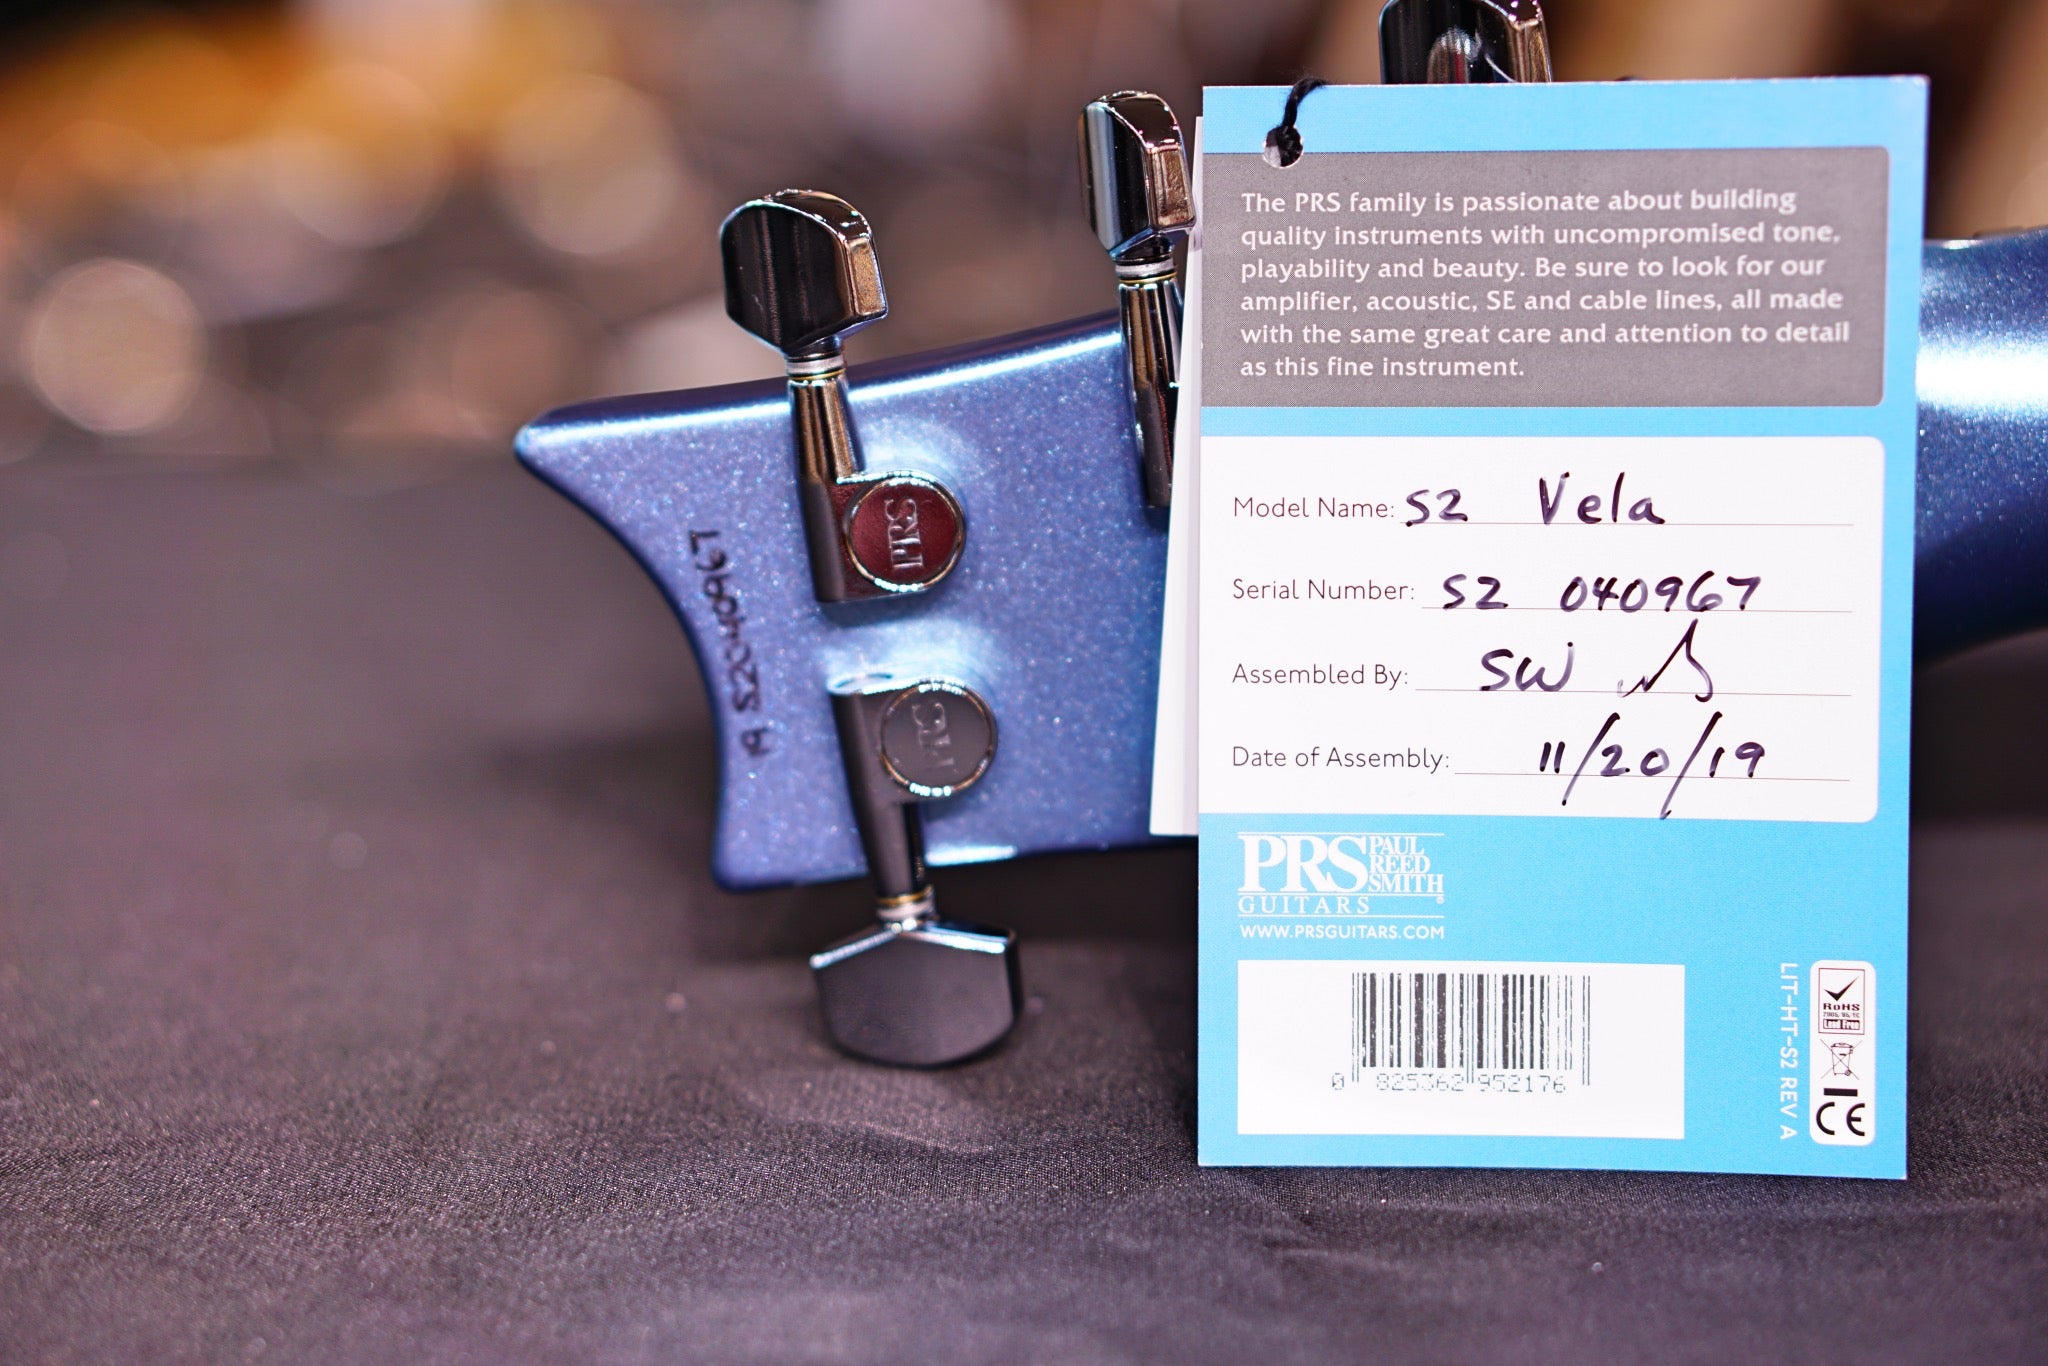 PRS S2 Vela Frost Blue Metallic s2 040967 - HIENDGUITAR   PRS GUITAR